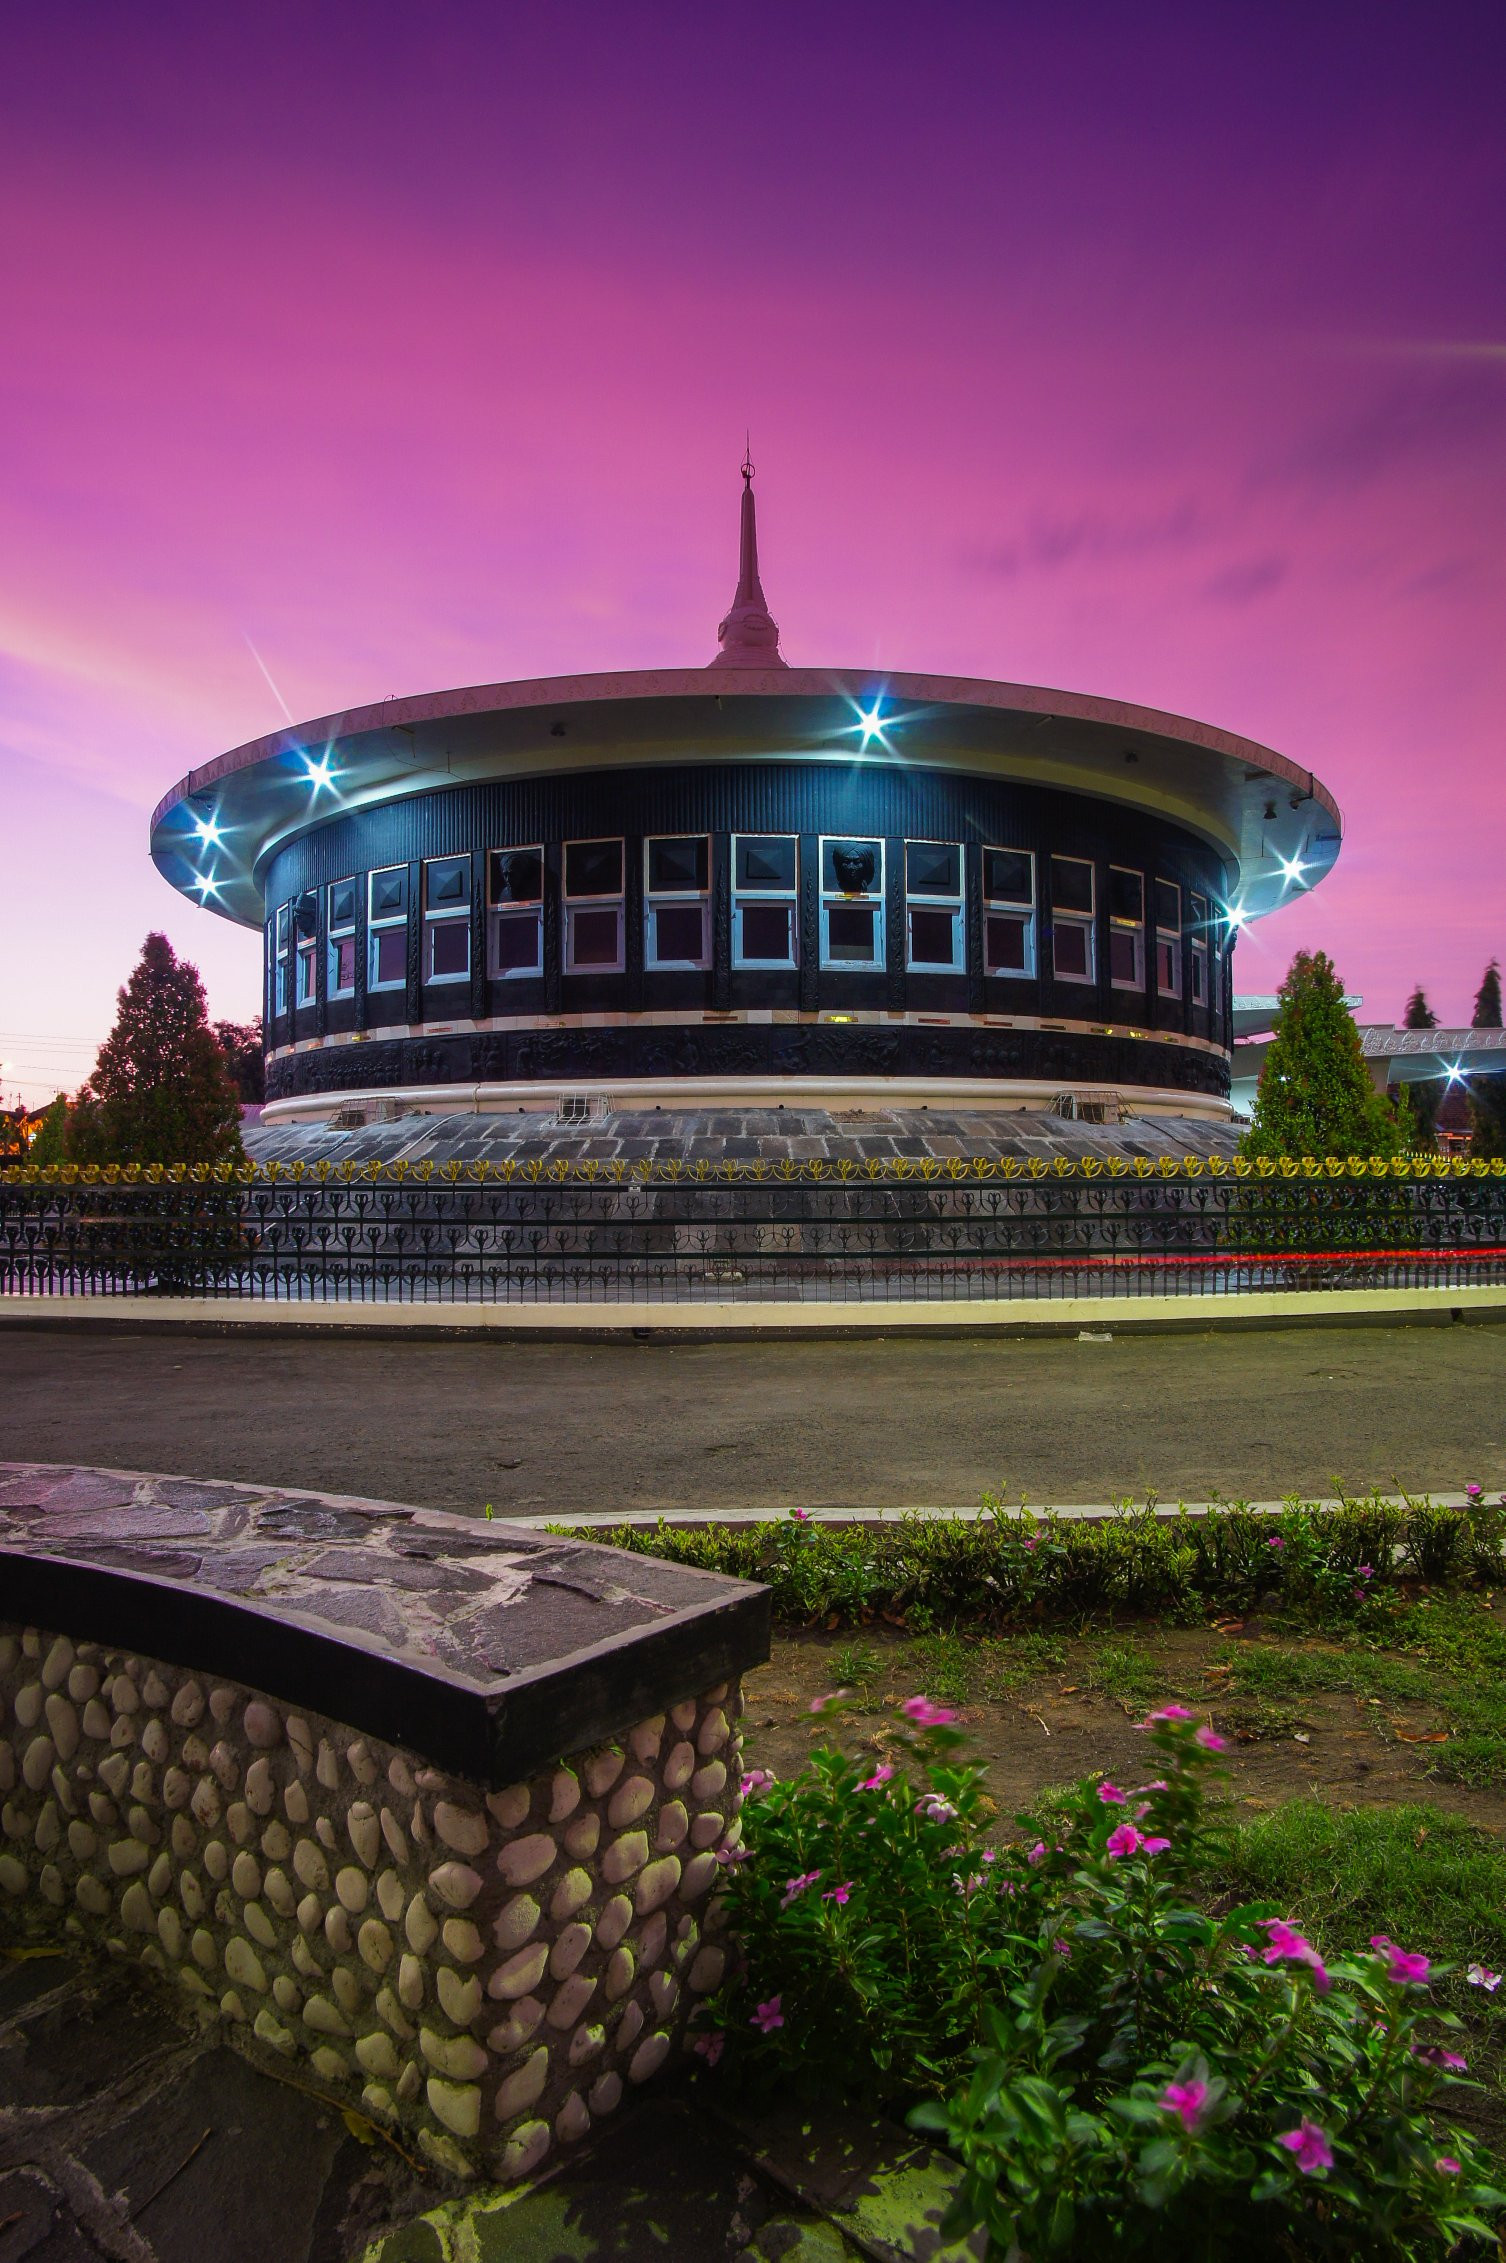 Museum Perjuangan Yogyakarta